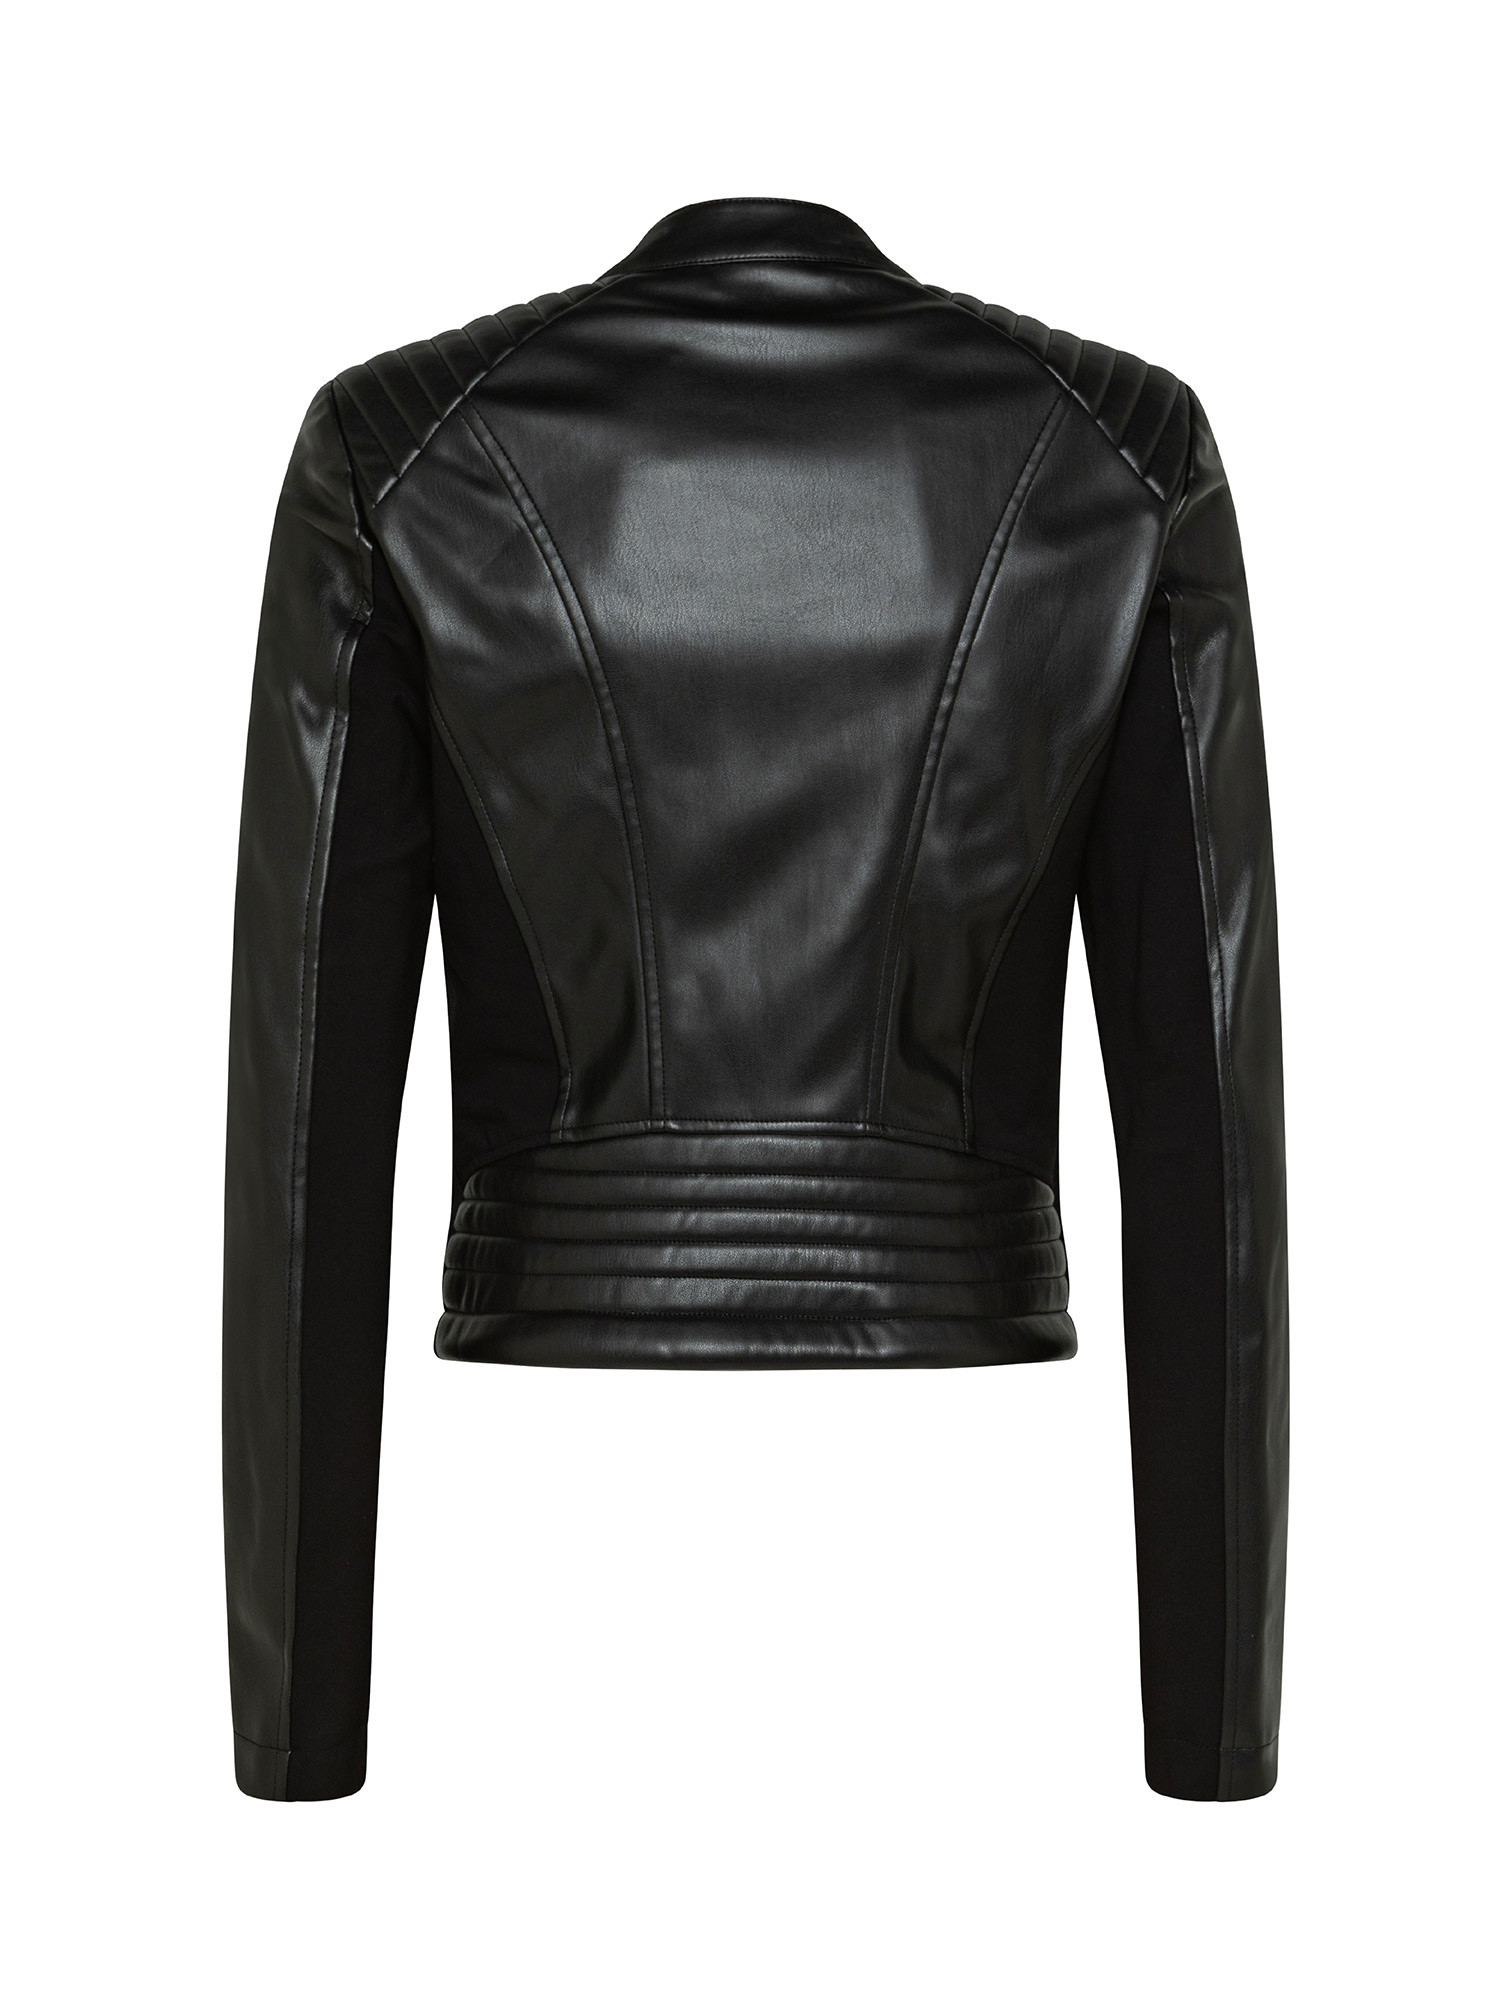 Leatherette jacket, Black, large image number 1